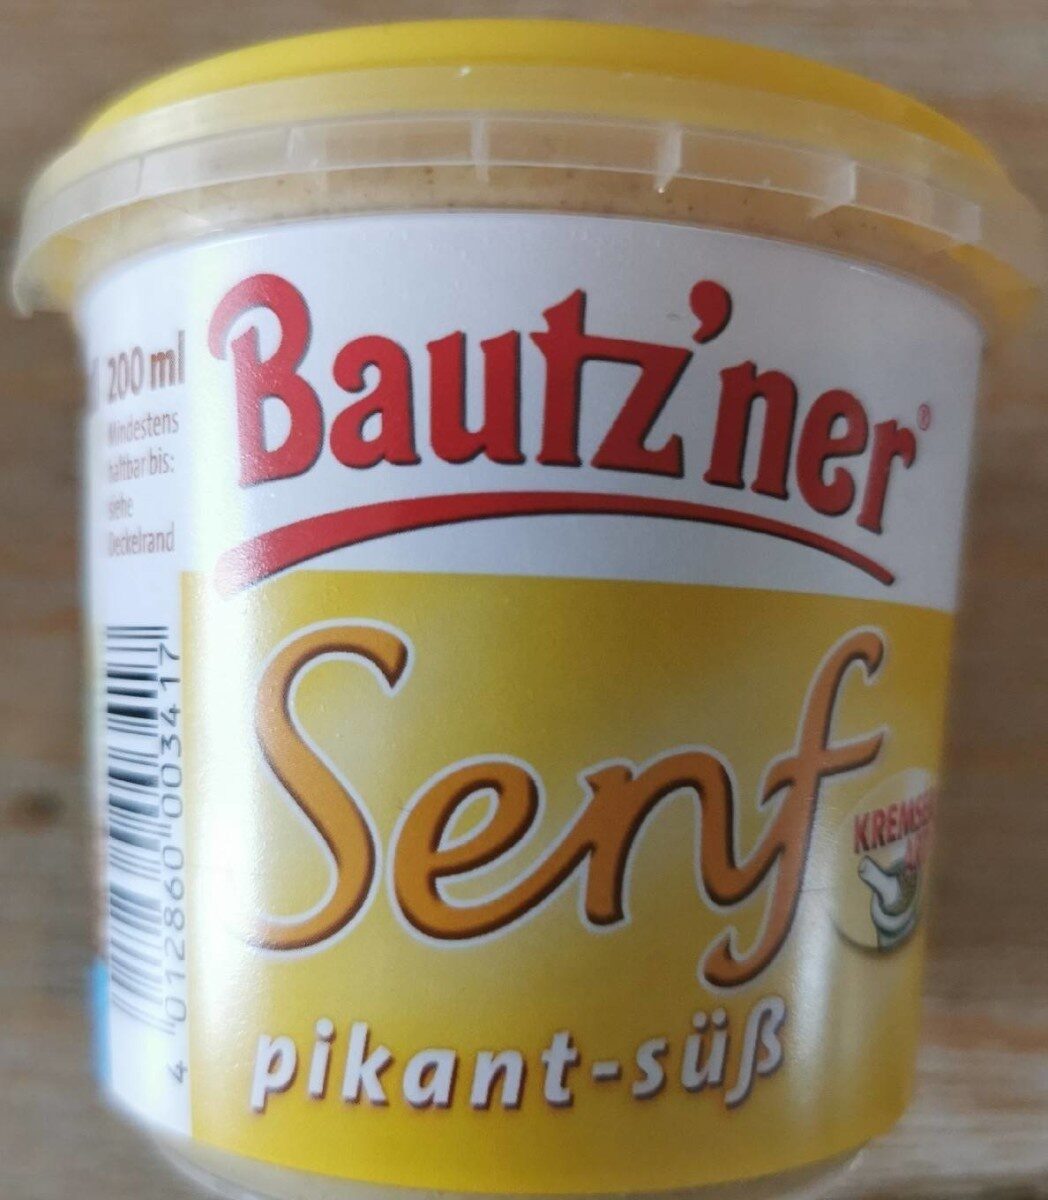 Bautz'ner Senf pikant-süß - Produkt